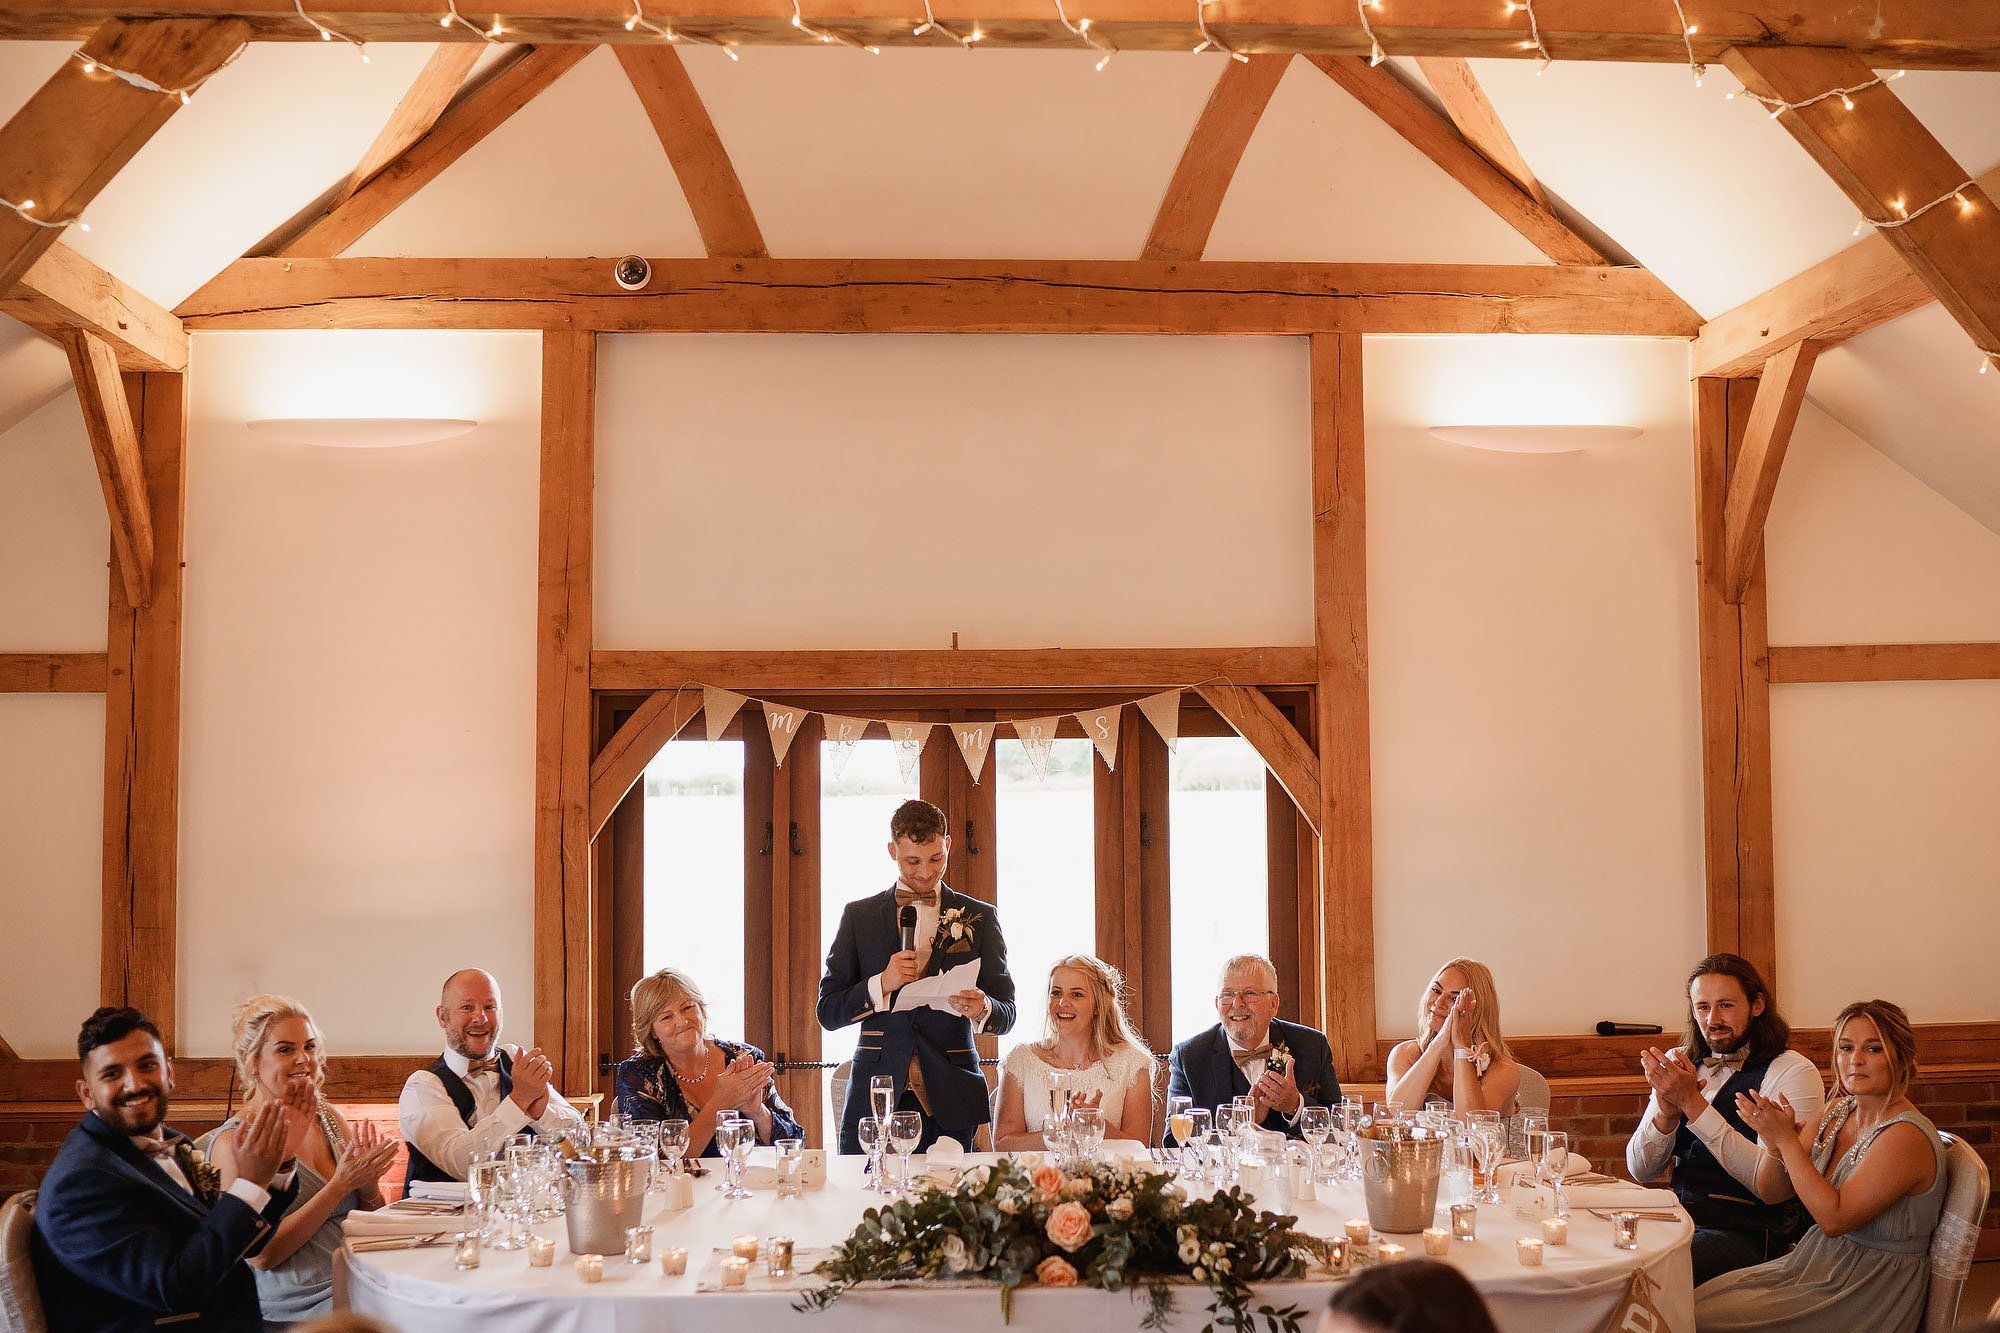 Wedding at sandhole oak barn by arj photography